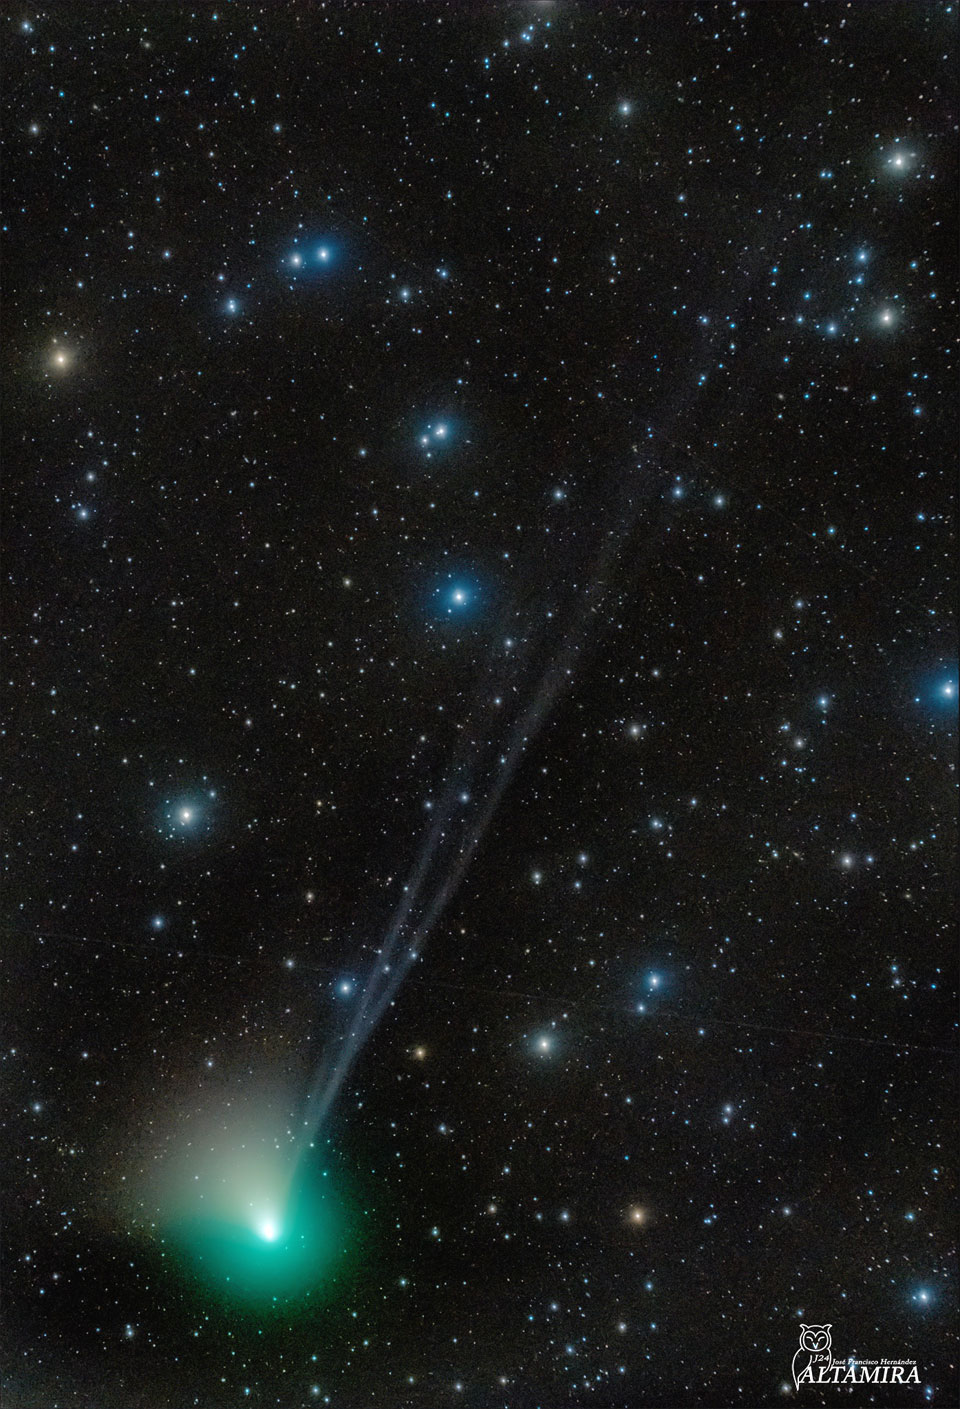 Tails of Comet ZTF